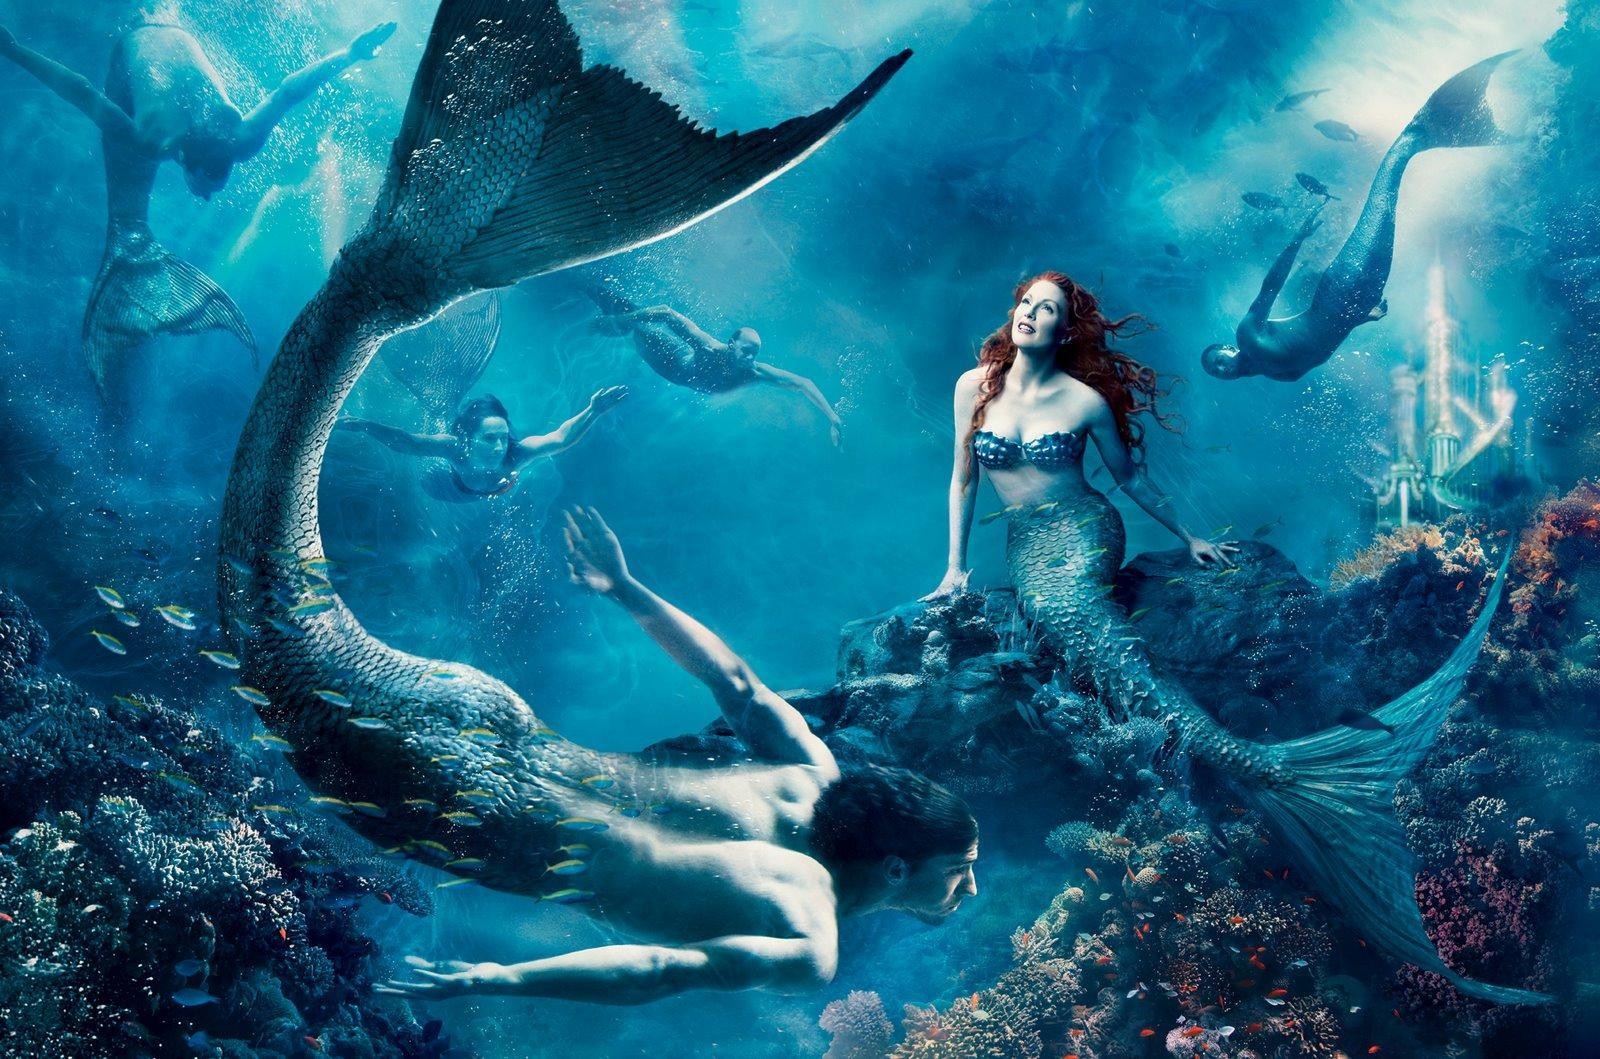 General 1600x1059 fantasy art fantasy girl mermaids underwater digital art cyan women men